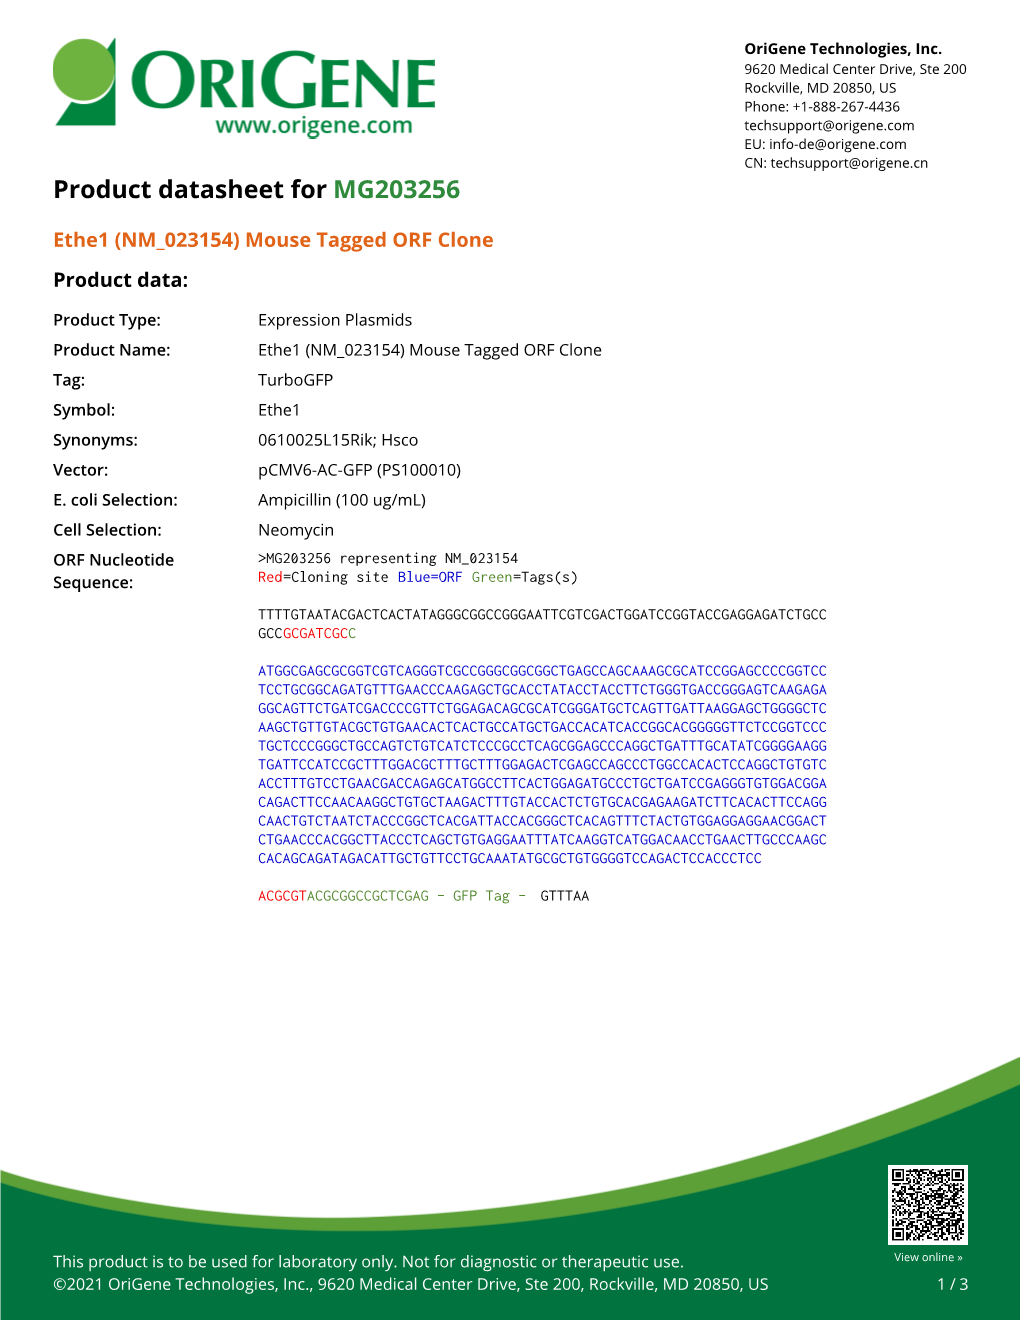 Ethe1 (NM 023154) Mouse Tagged ORF Clone – MG203256 | Origene